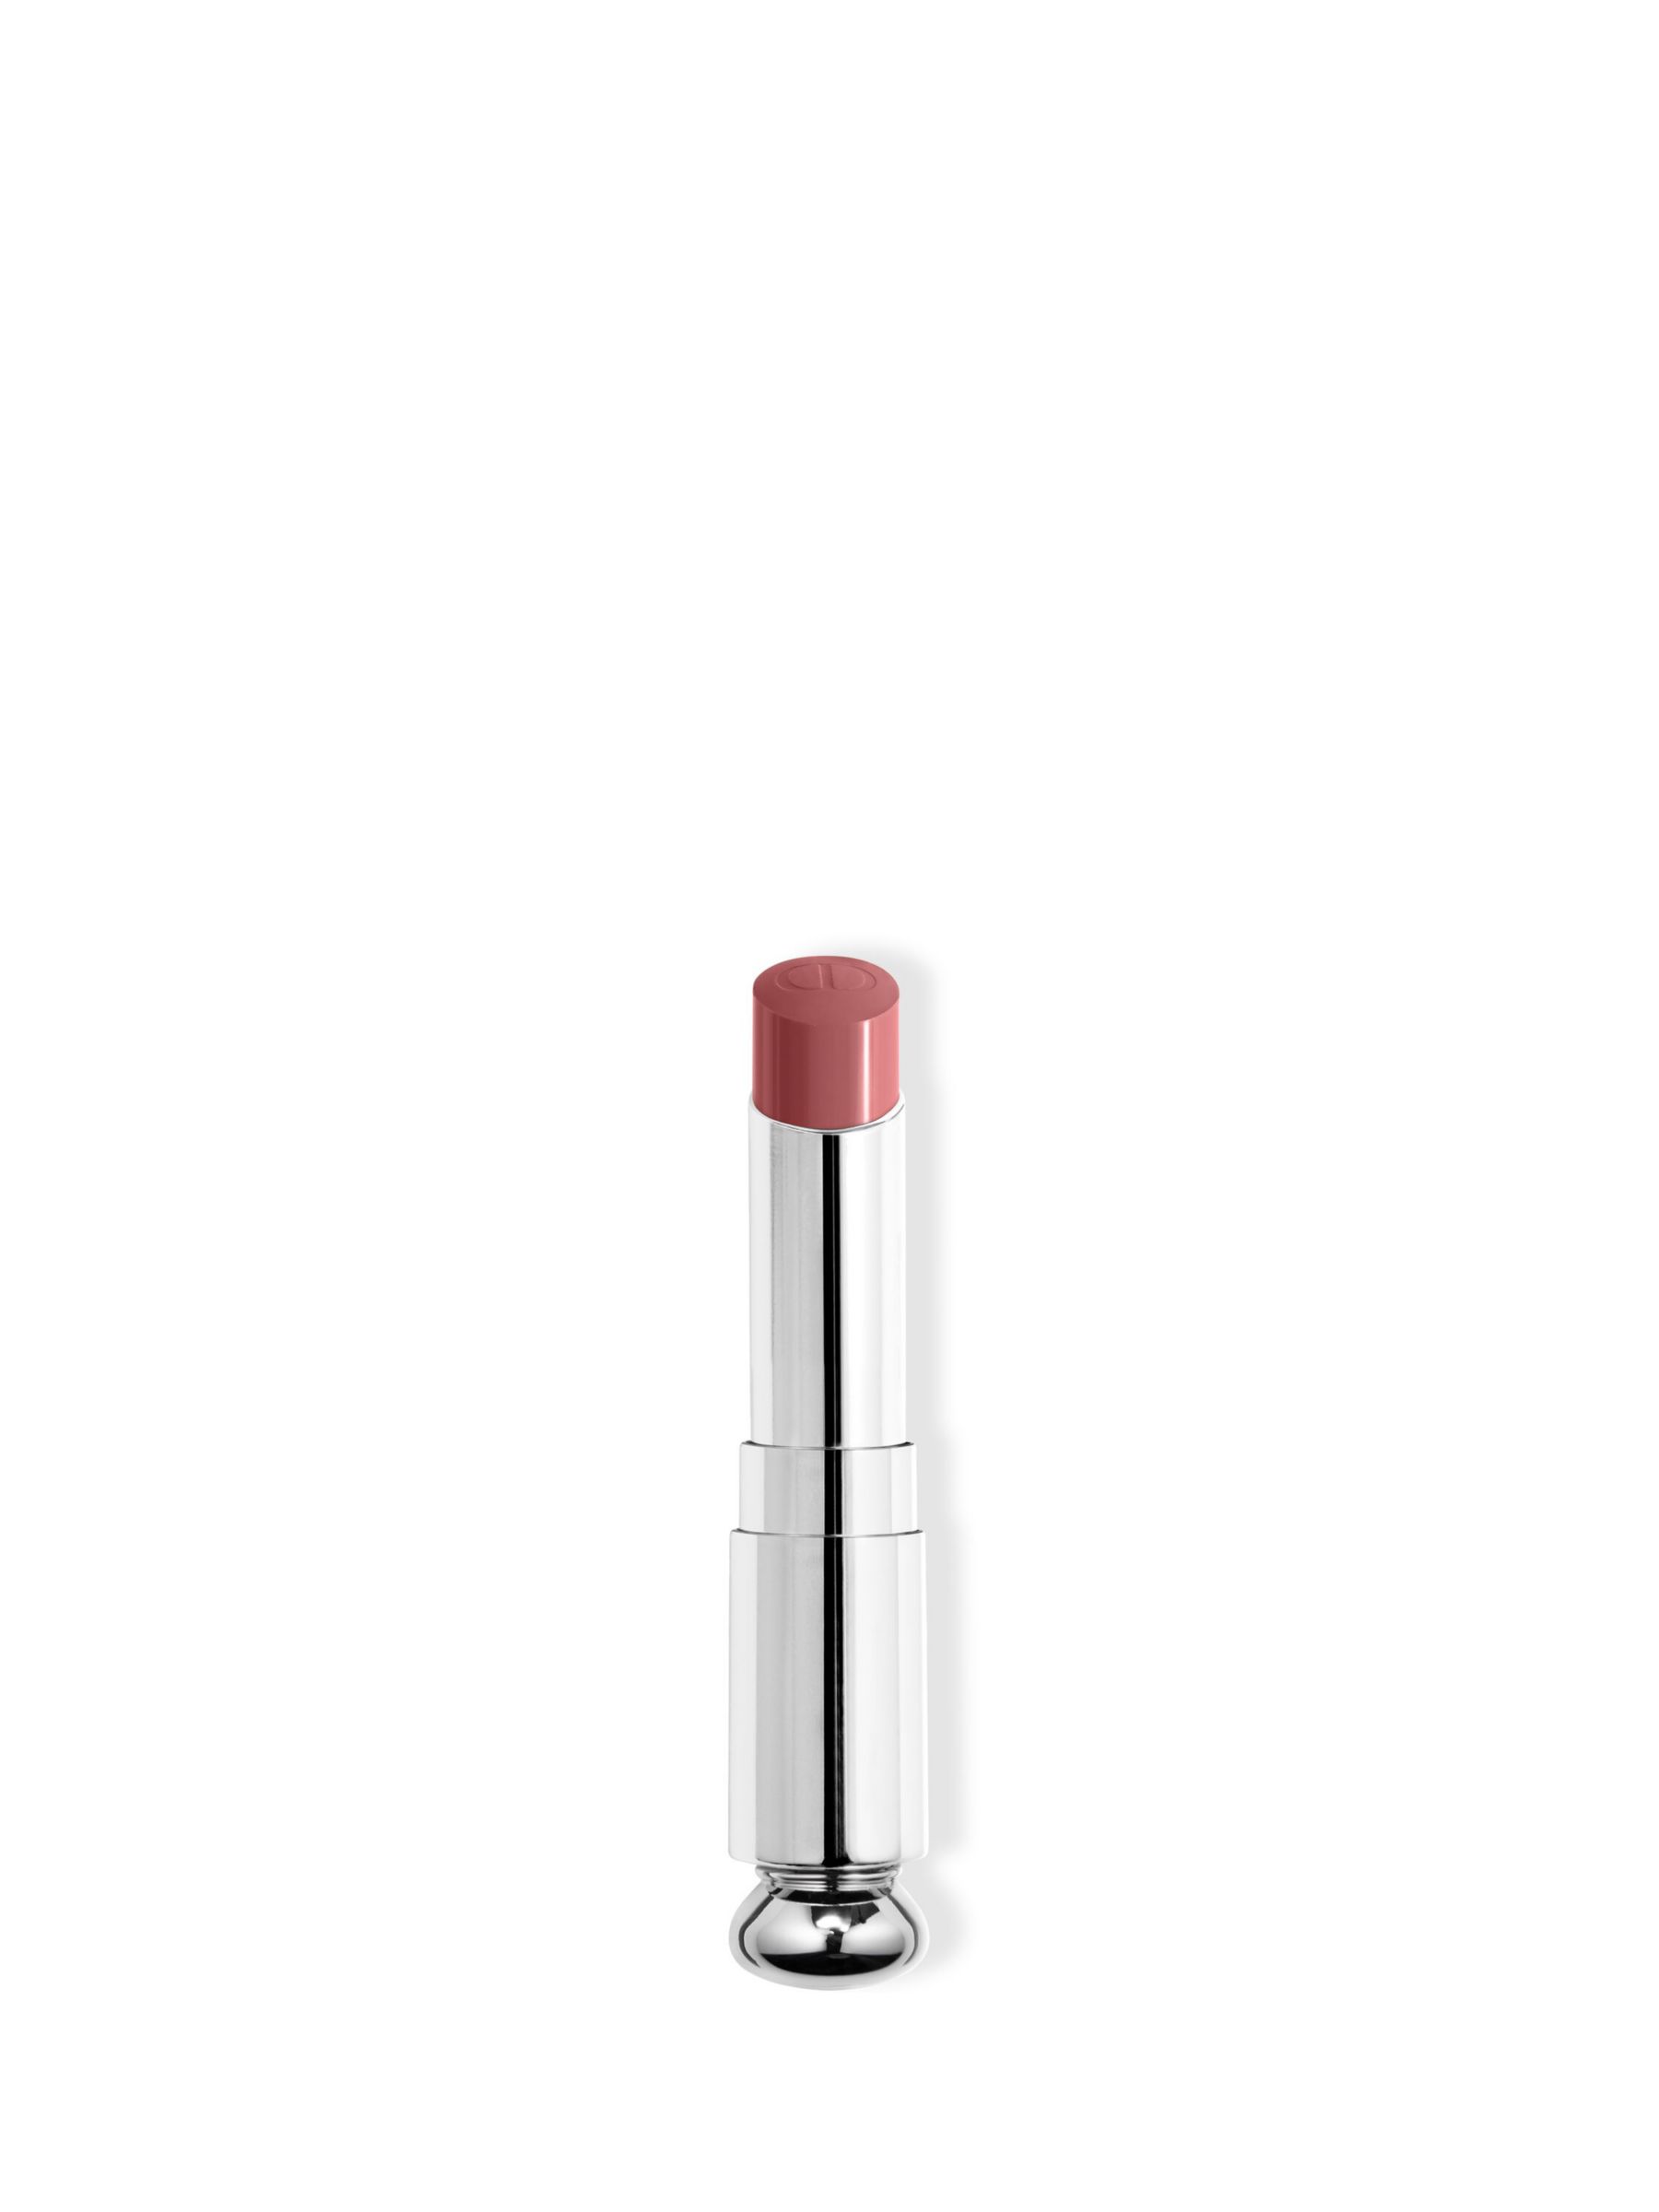 DIOR Addict Shine Lipstick Refill, 521 Diorelita at John Lewis & Partners